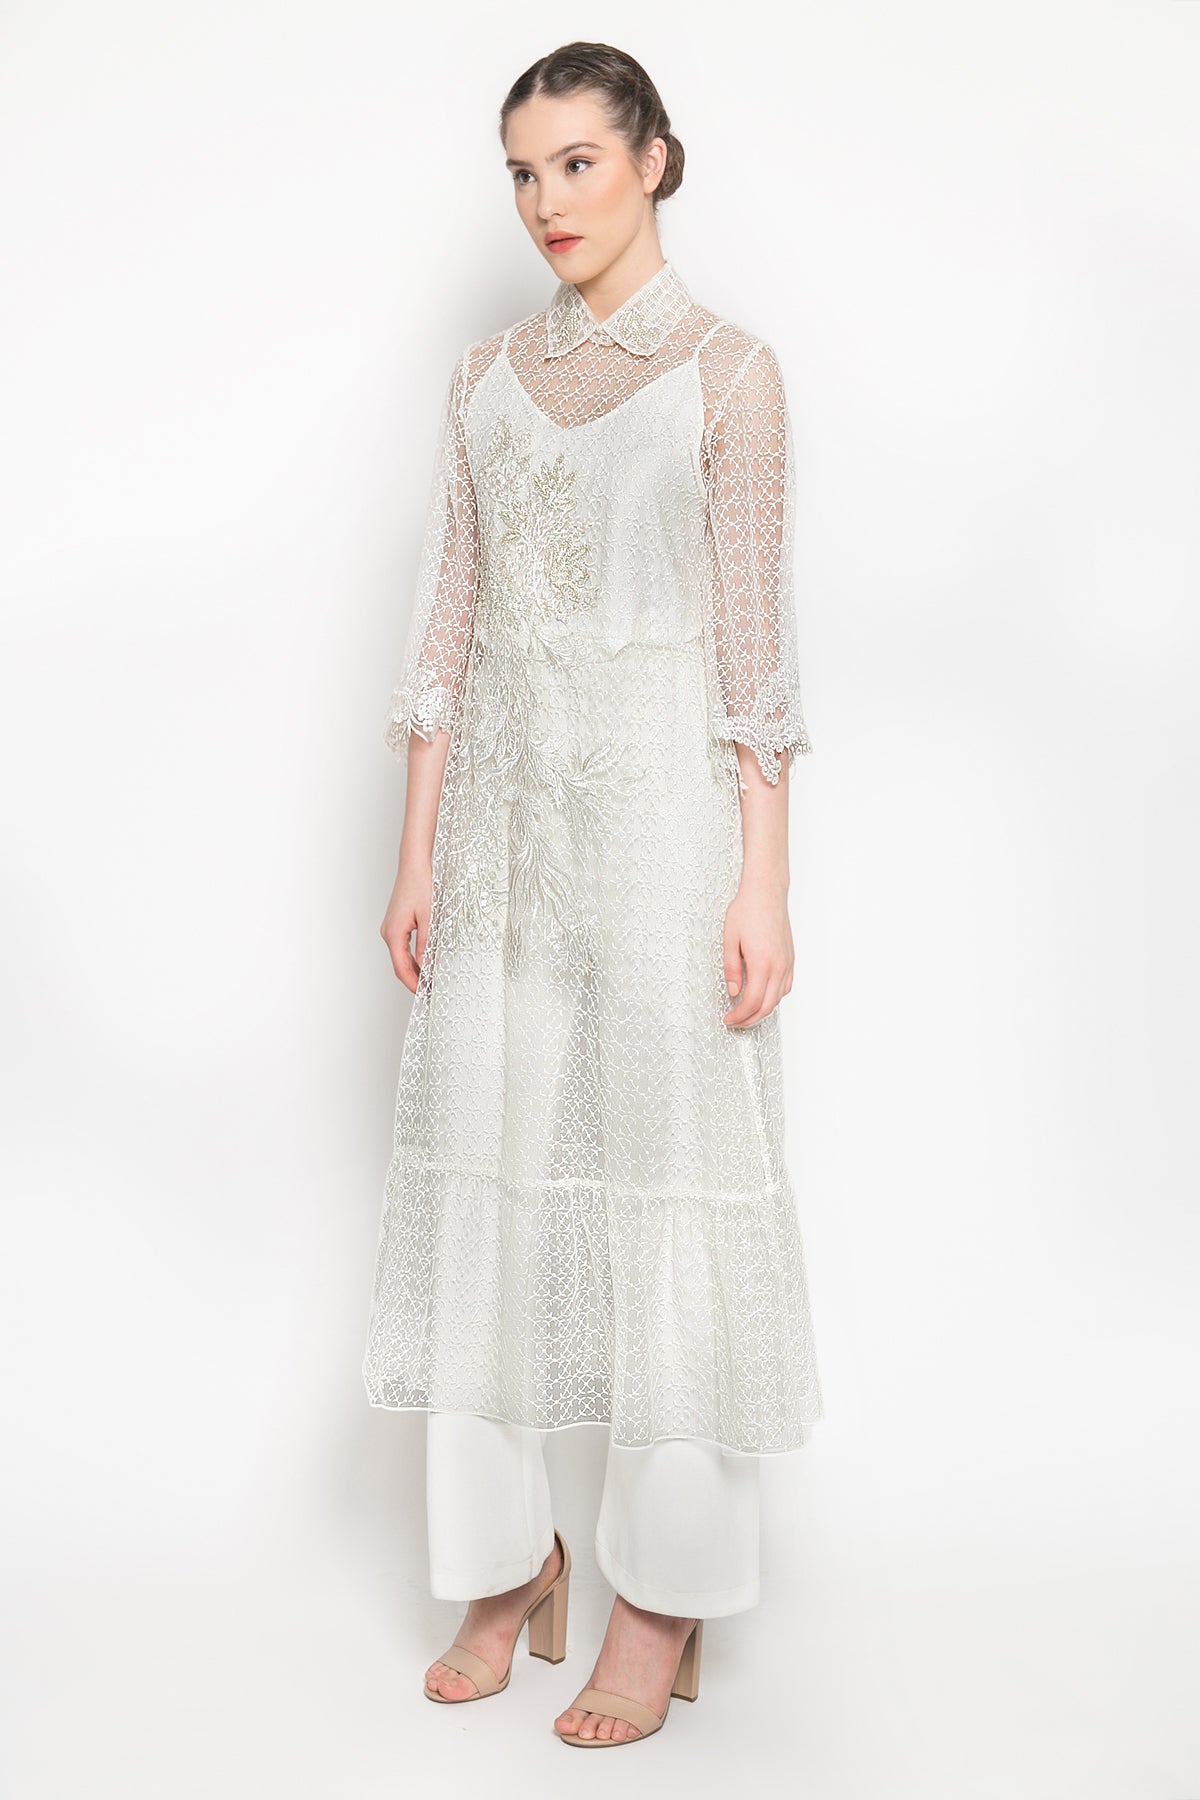 Ruh Dress No. 8 in White